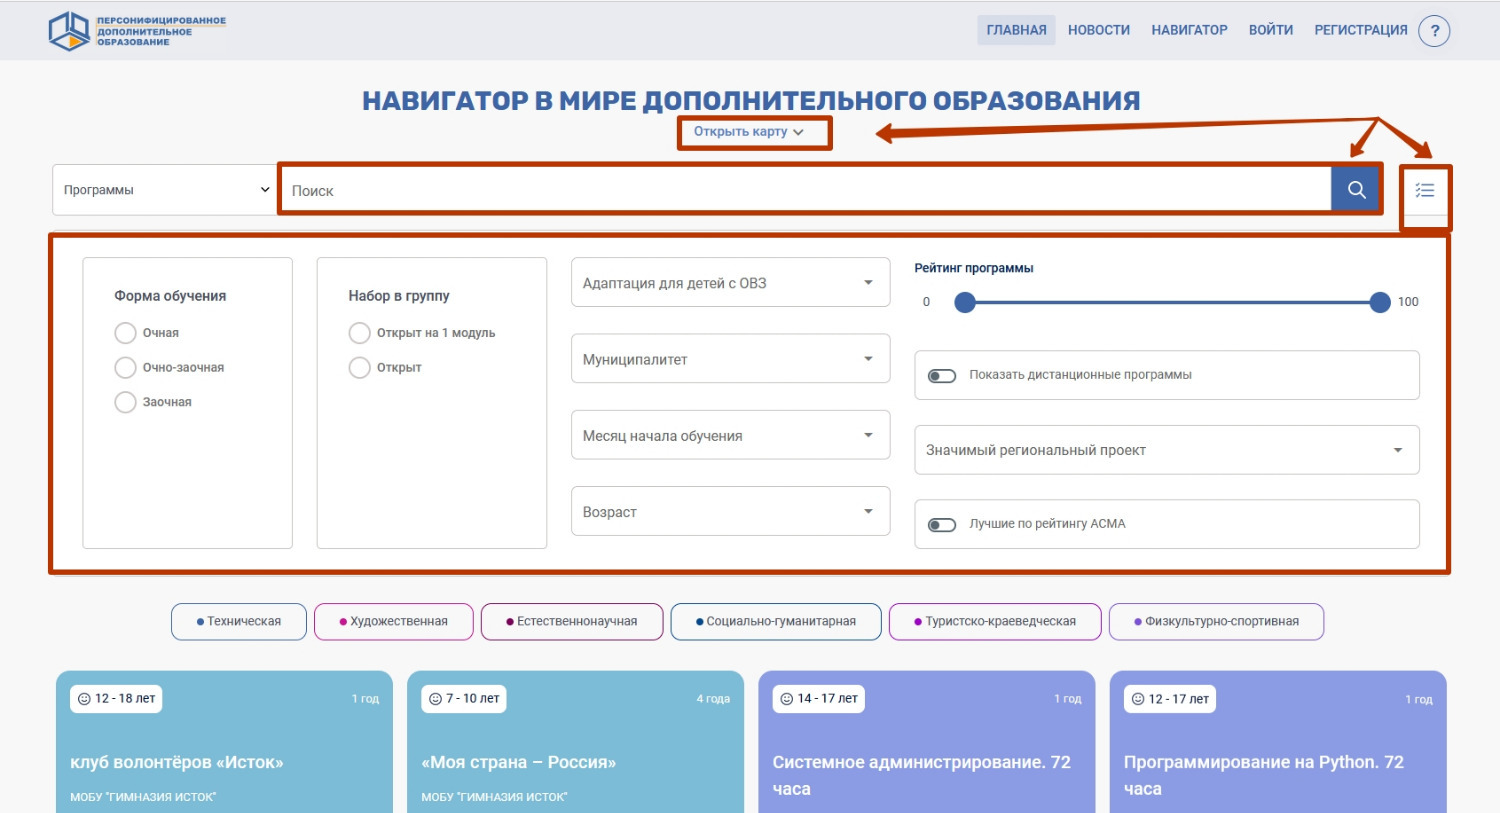 Поиск программ на портале ПФДО во Владивостоке